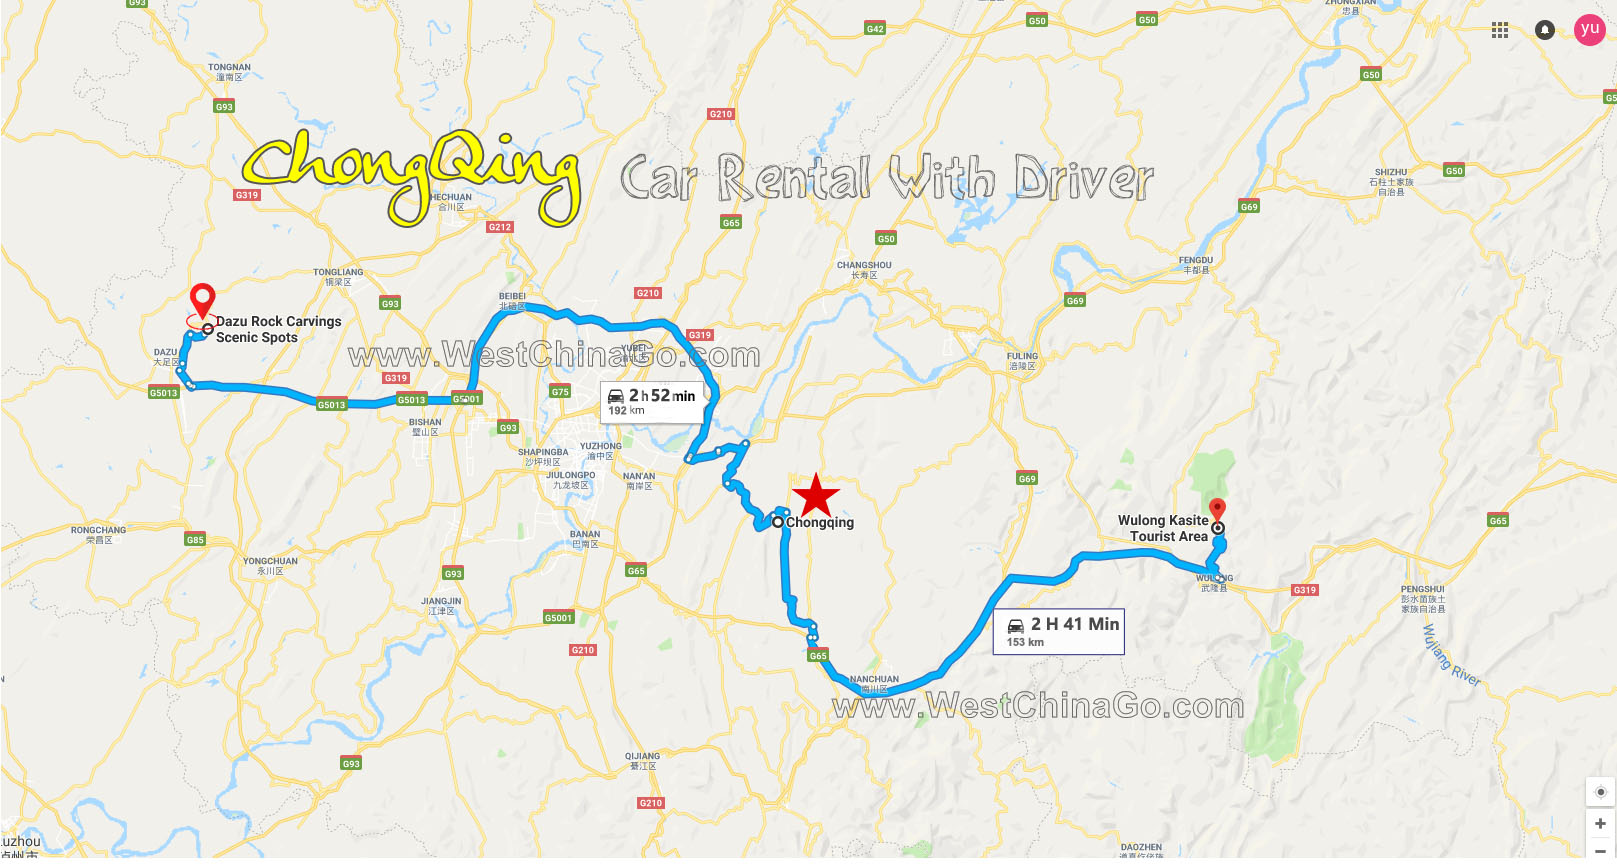 chongqing car rental with driver